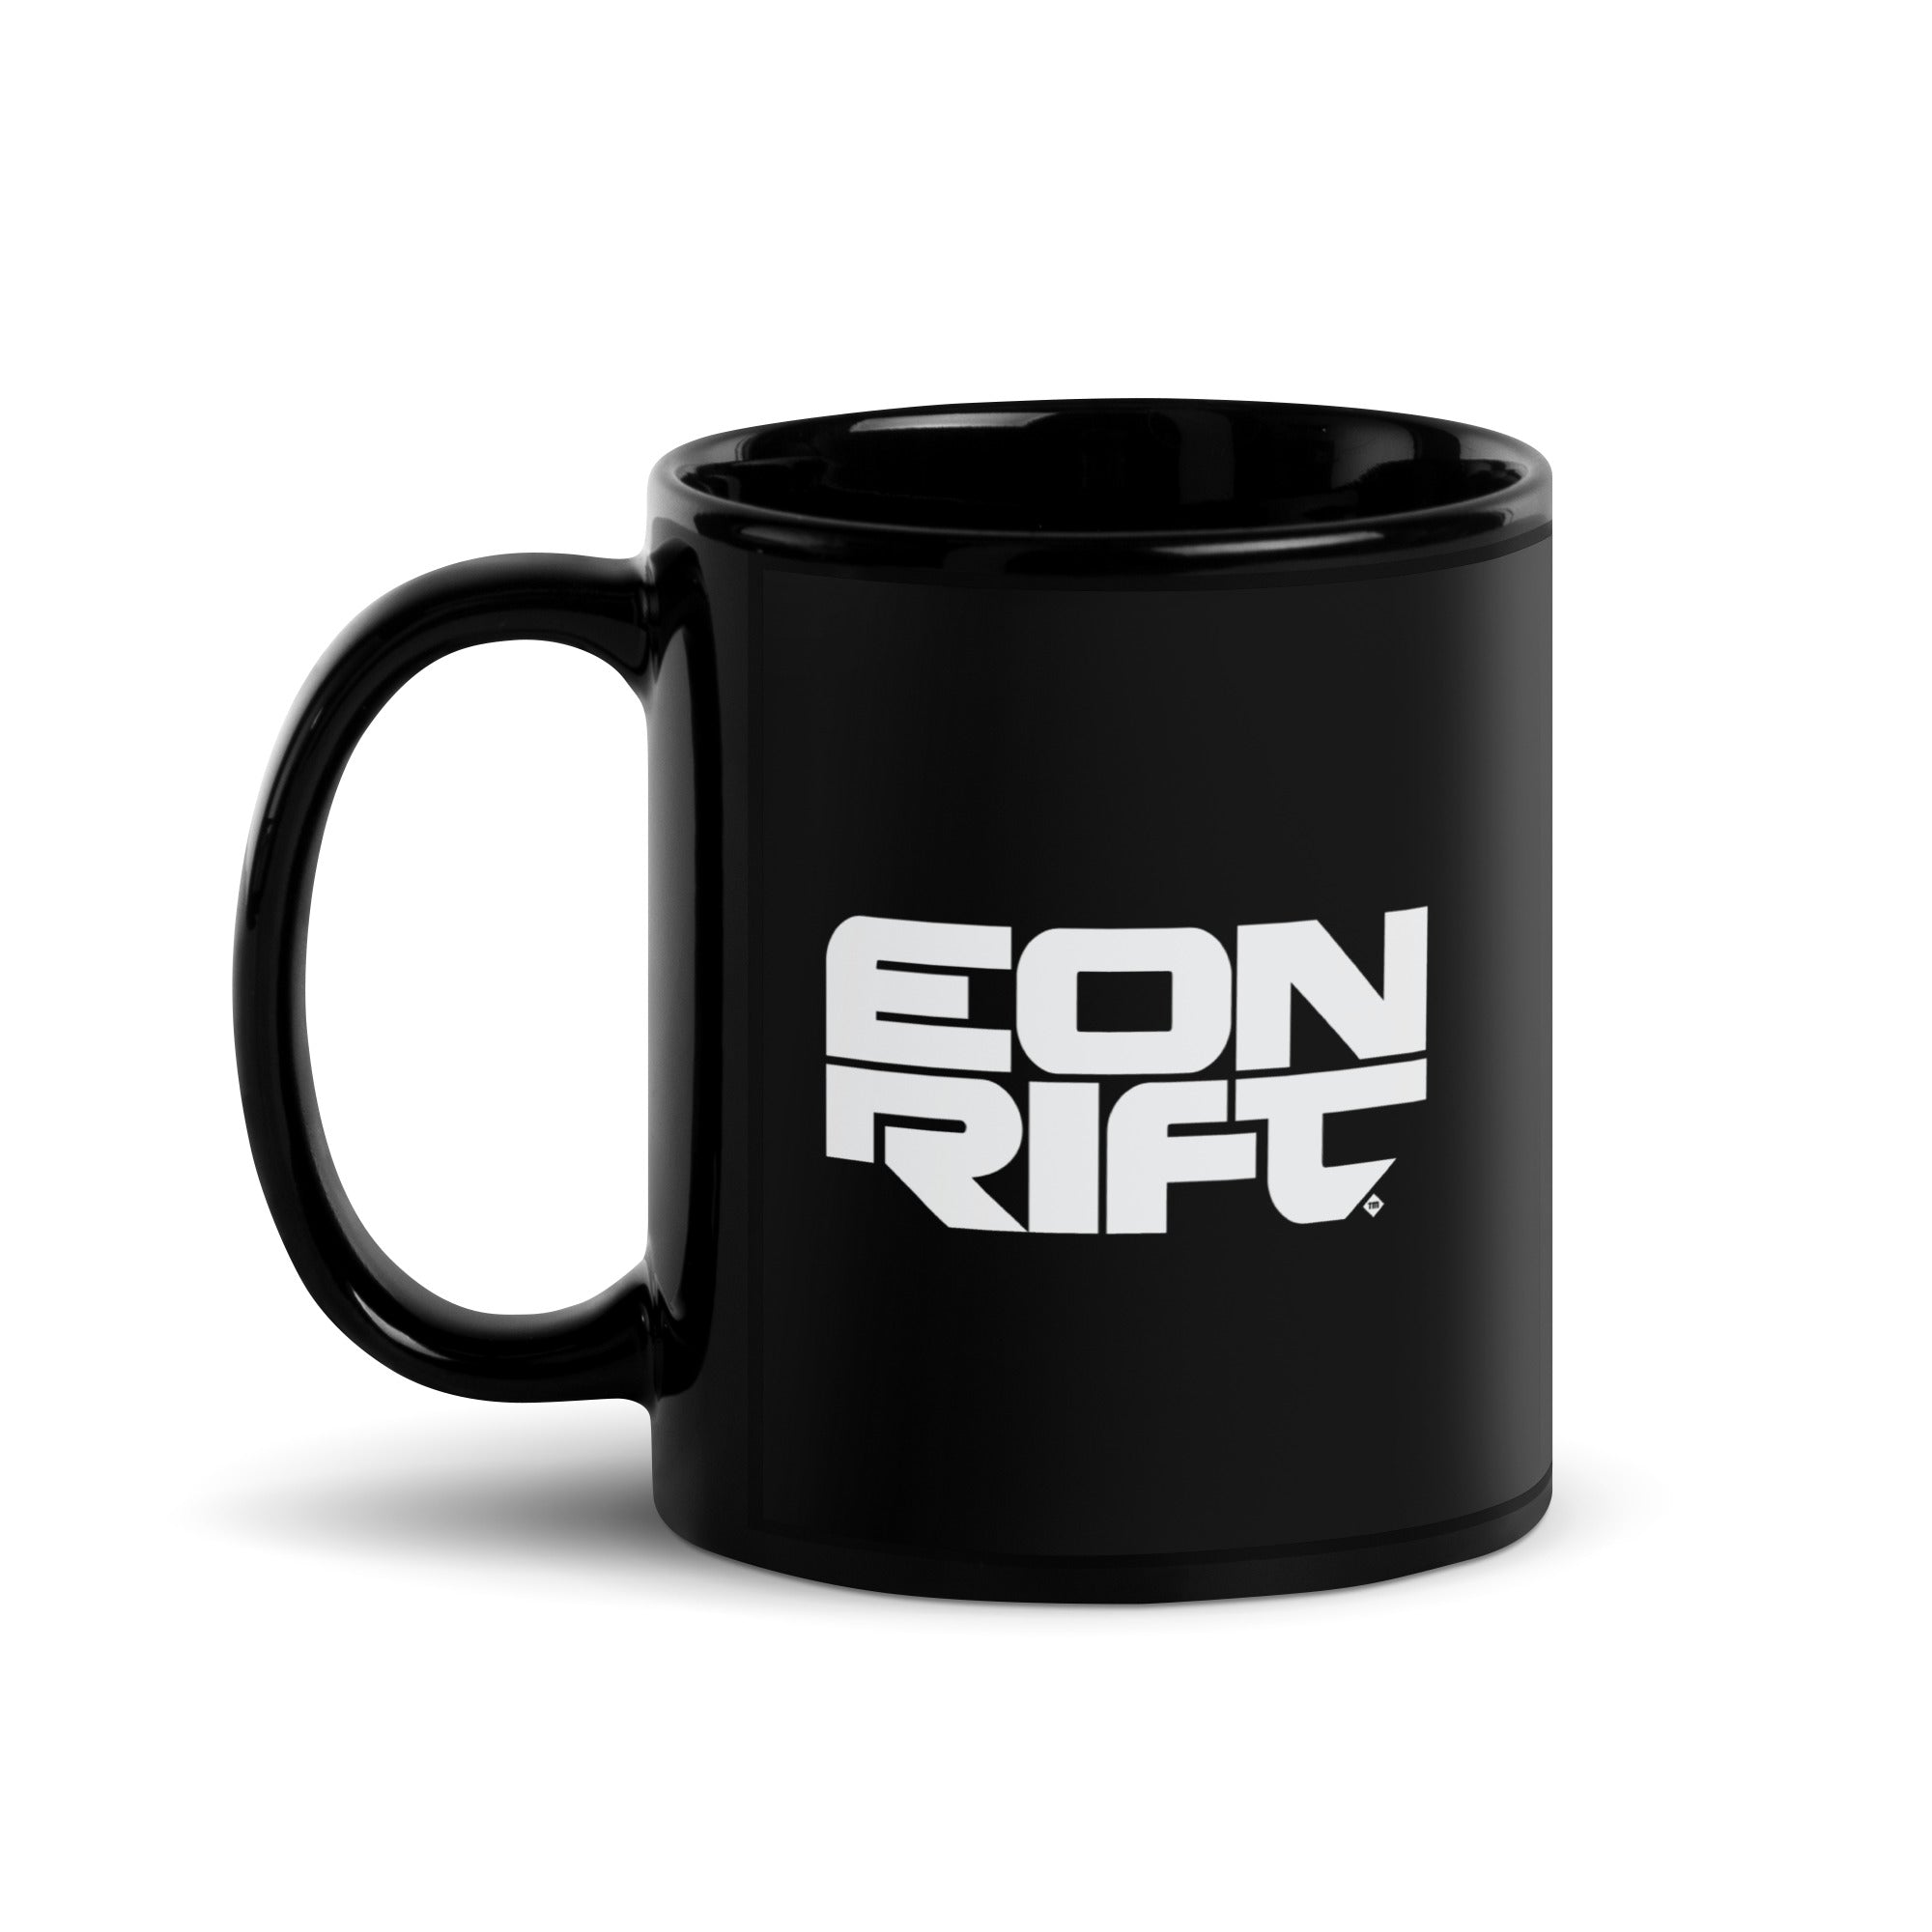 EON RIFT Mug